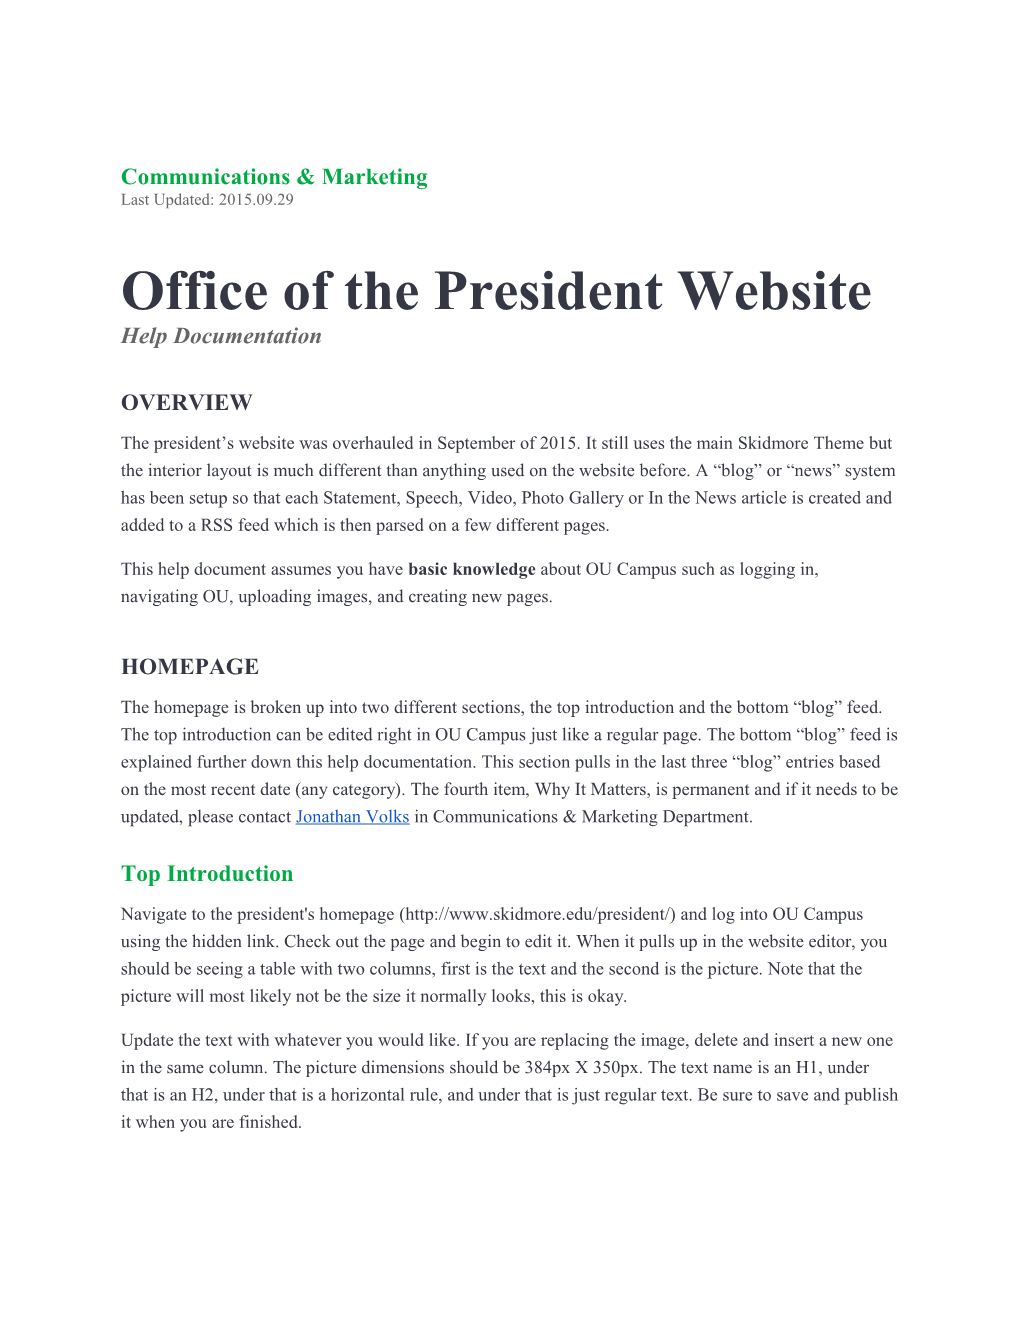 Office of the President Website